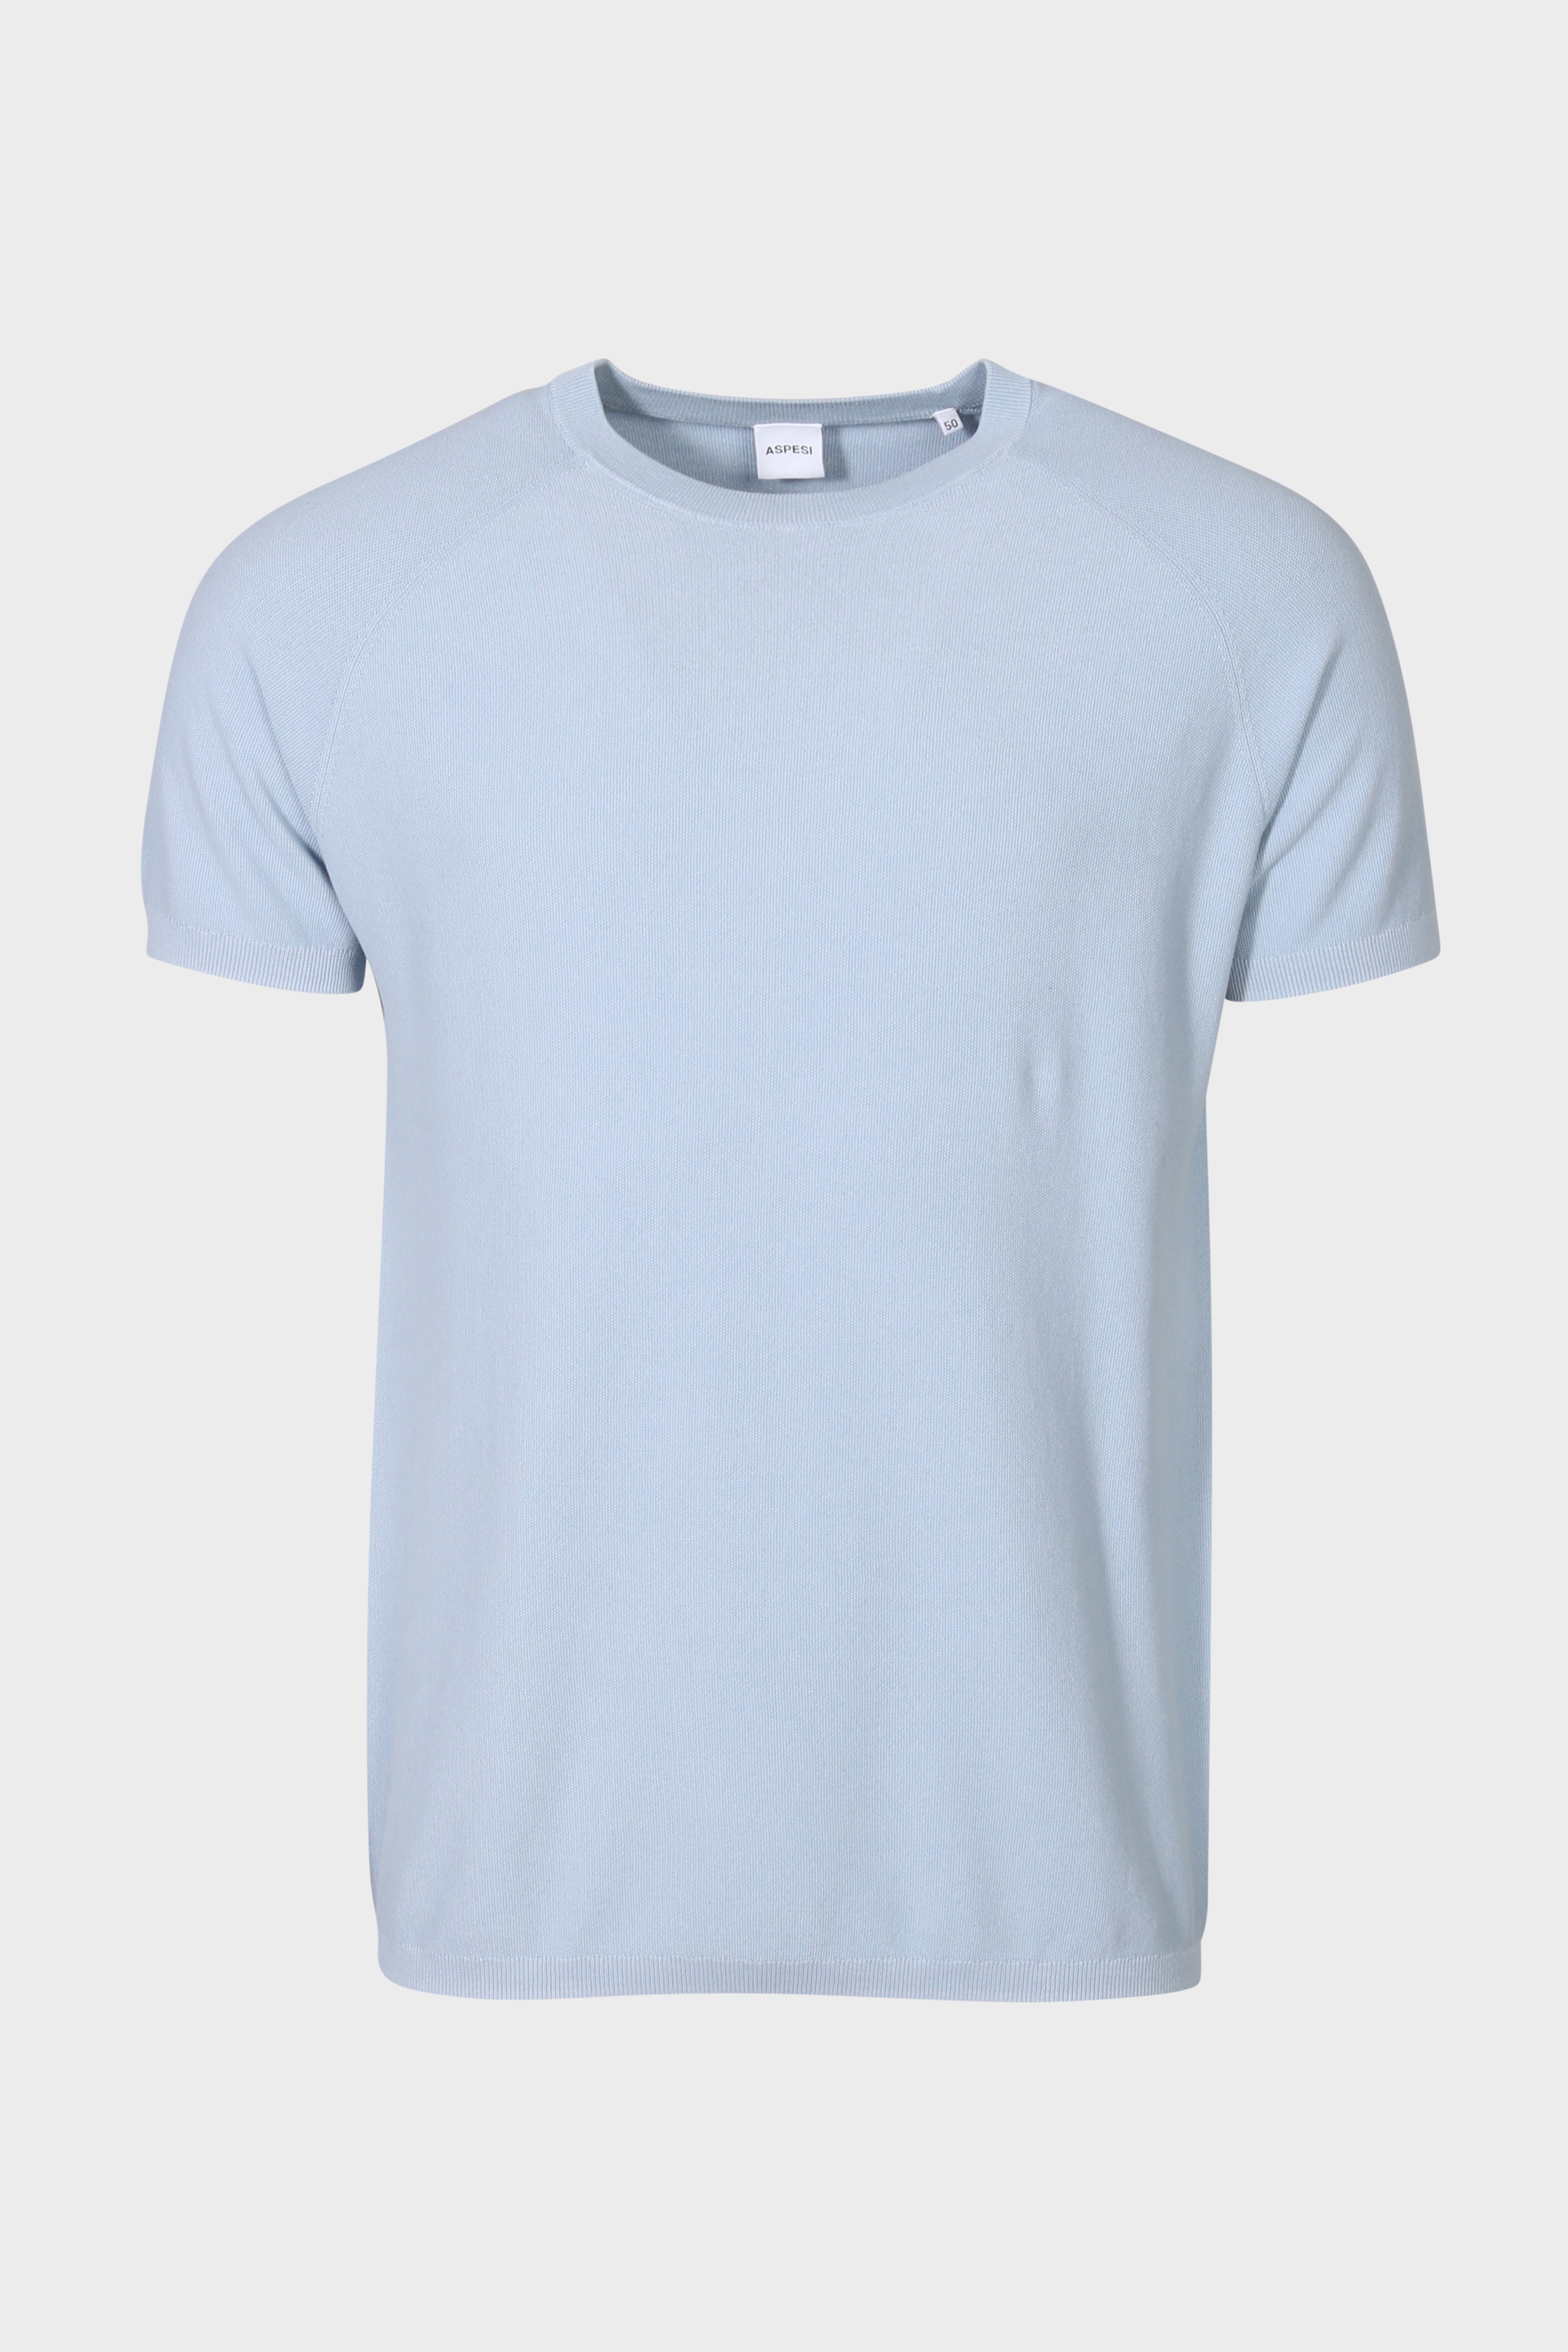 ASPESI Knit T-Shirt in Light Blue 54